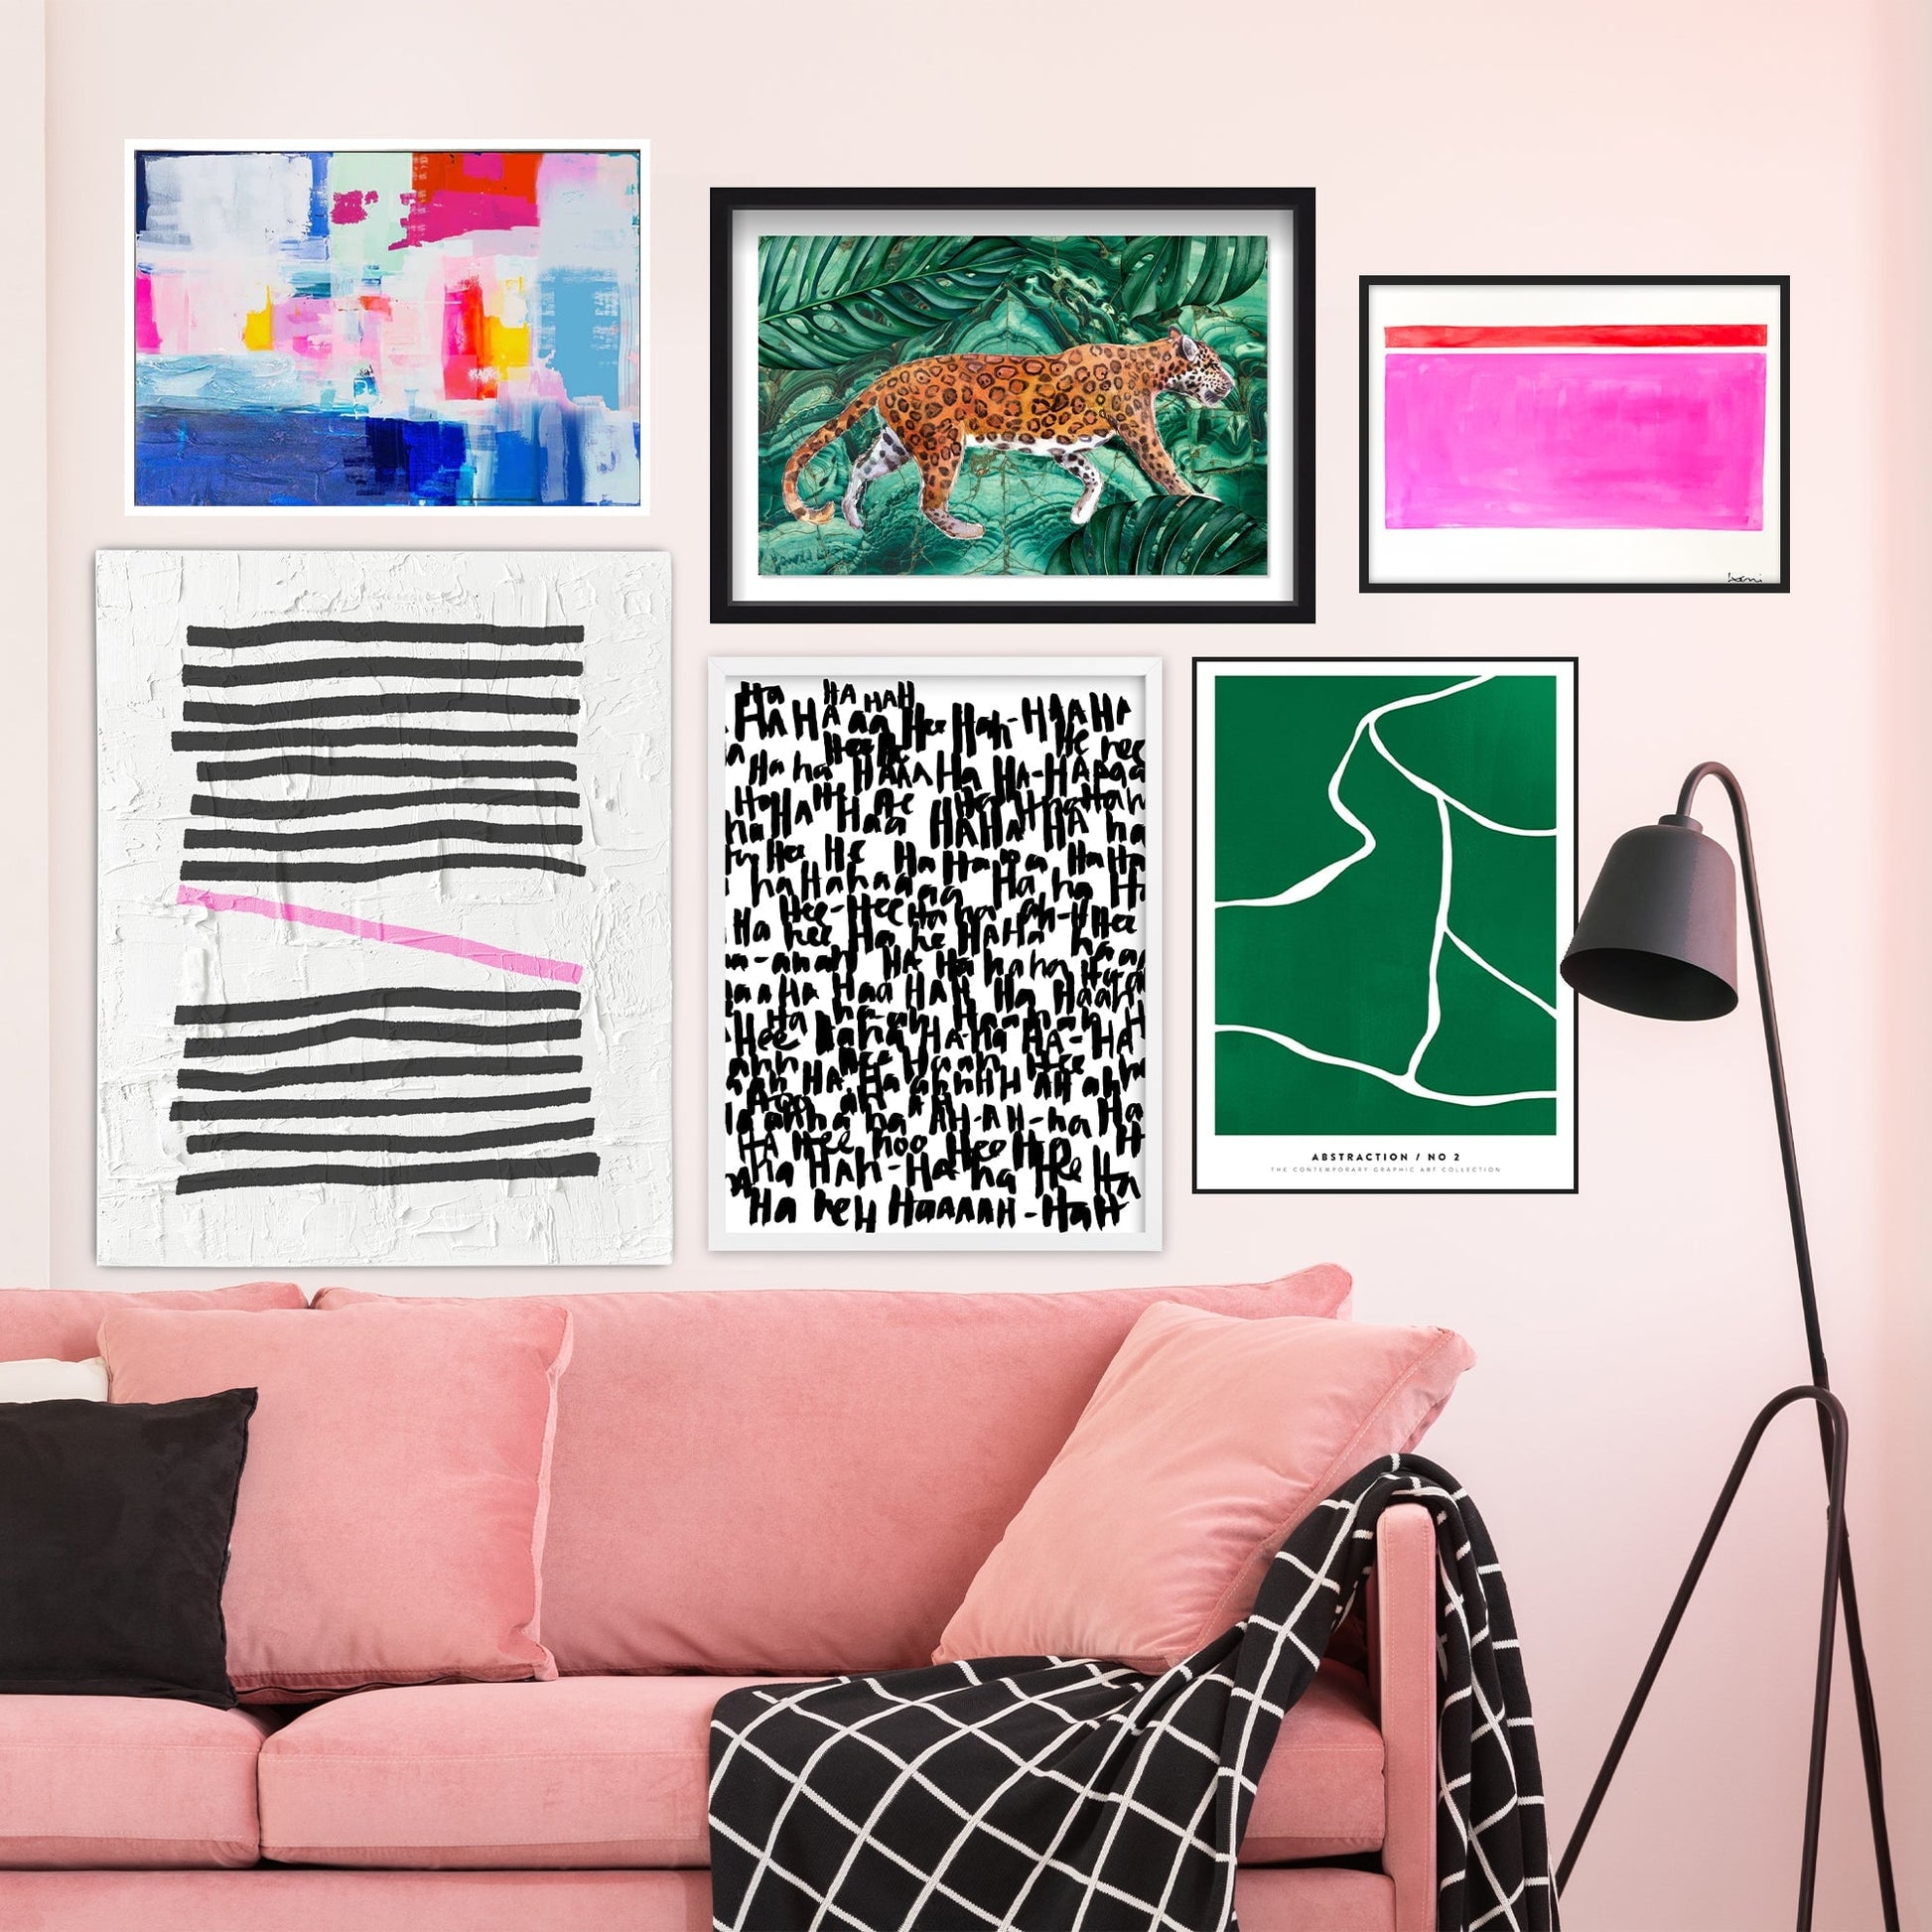 Abstract Black + Pink Lines Textured Art TEXTURED ART LULUSIMONSTUDIO 